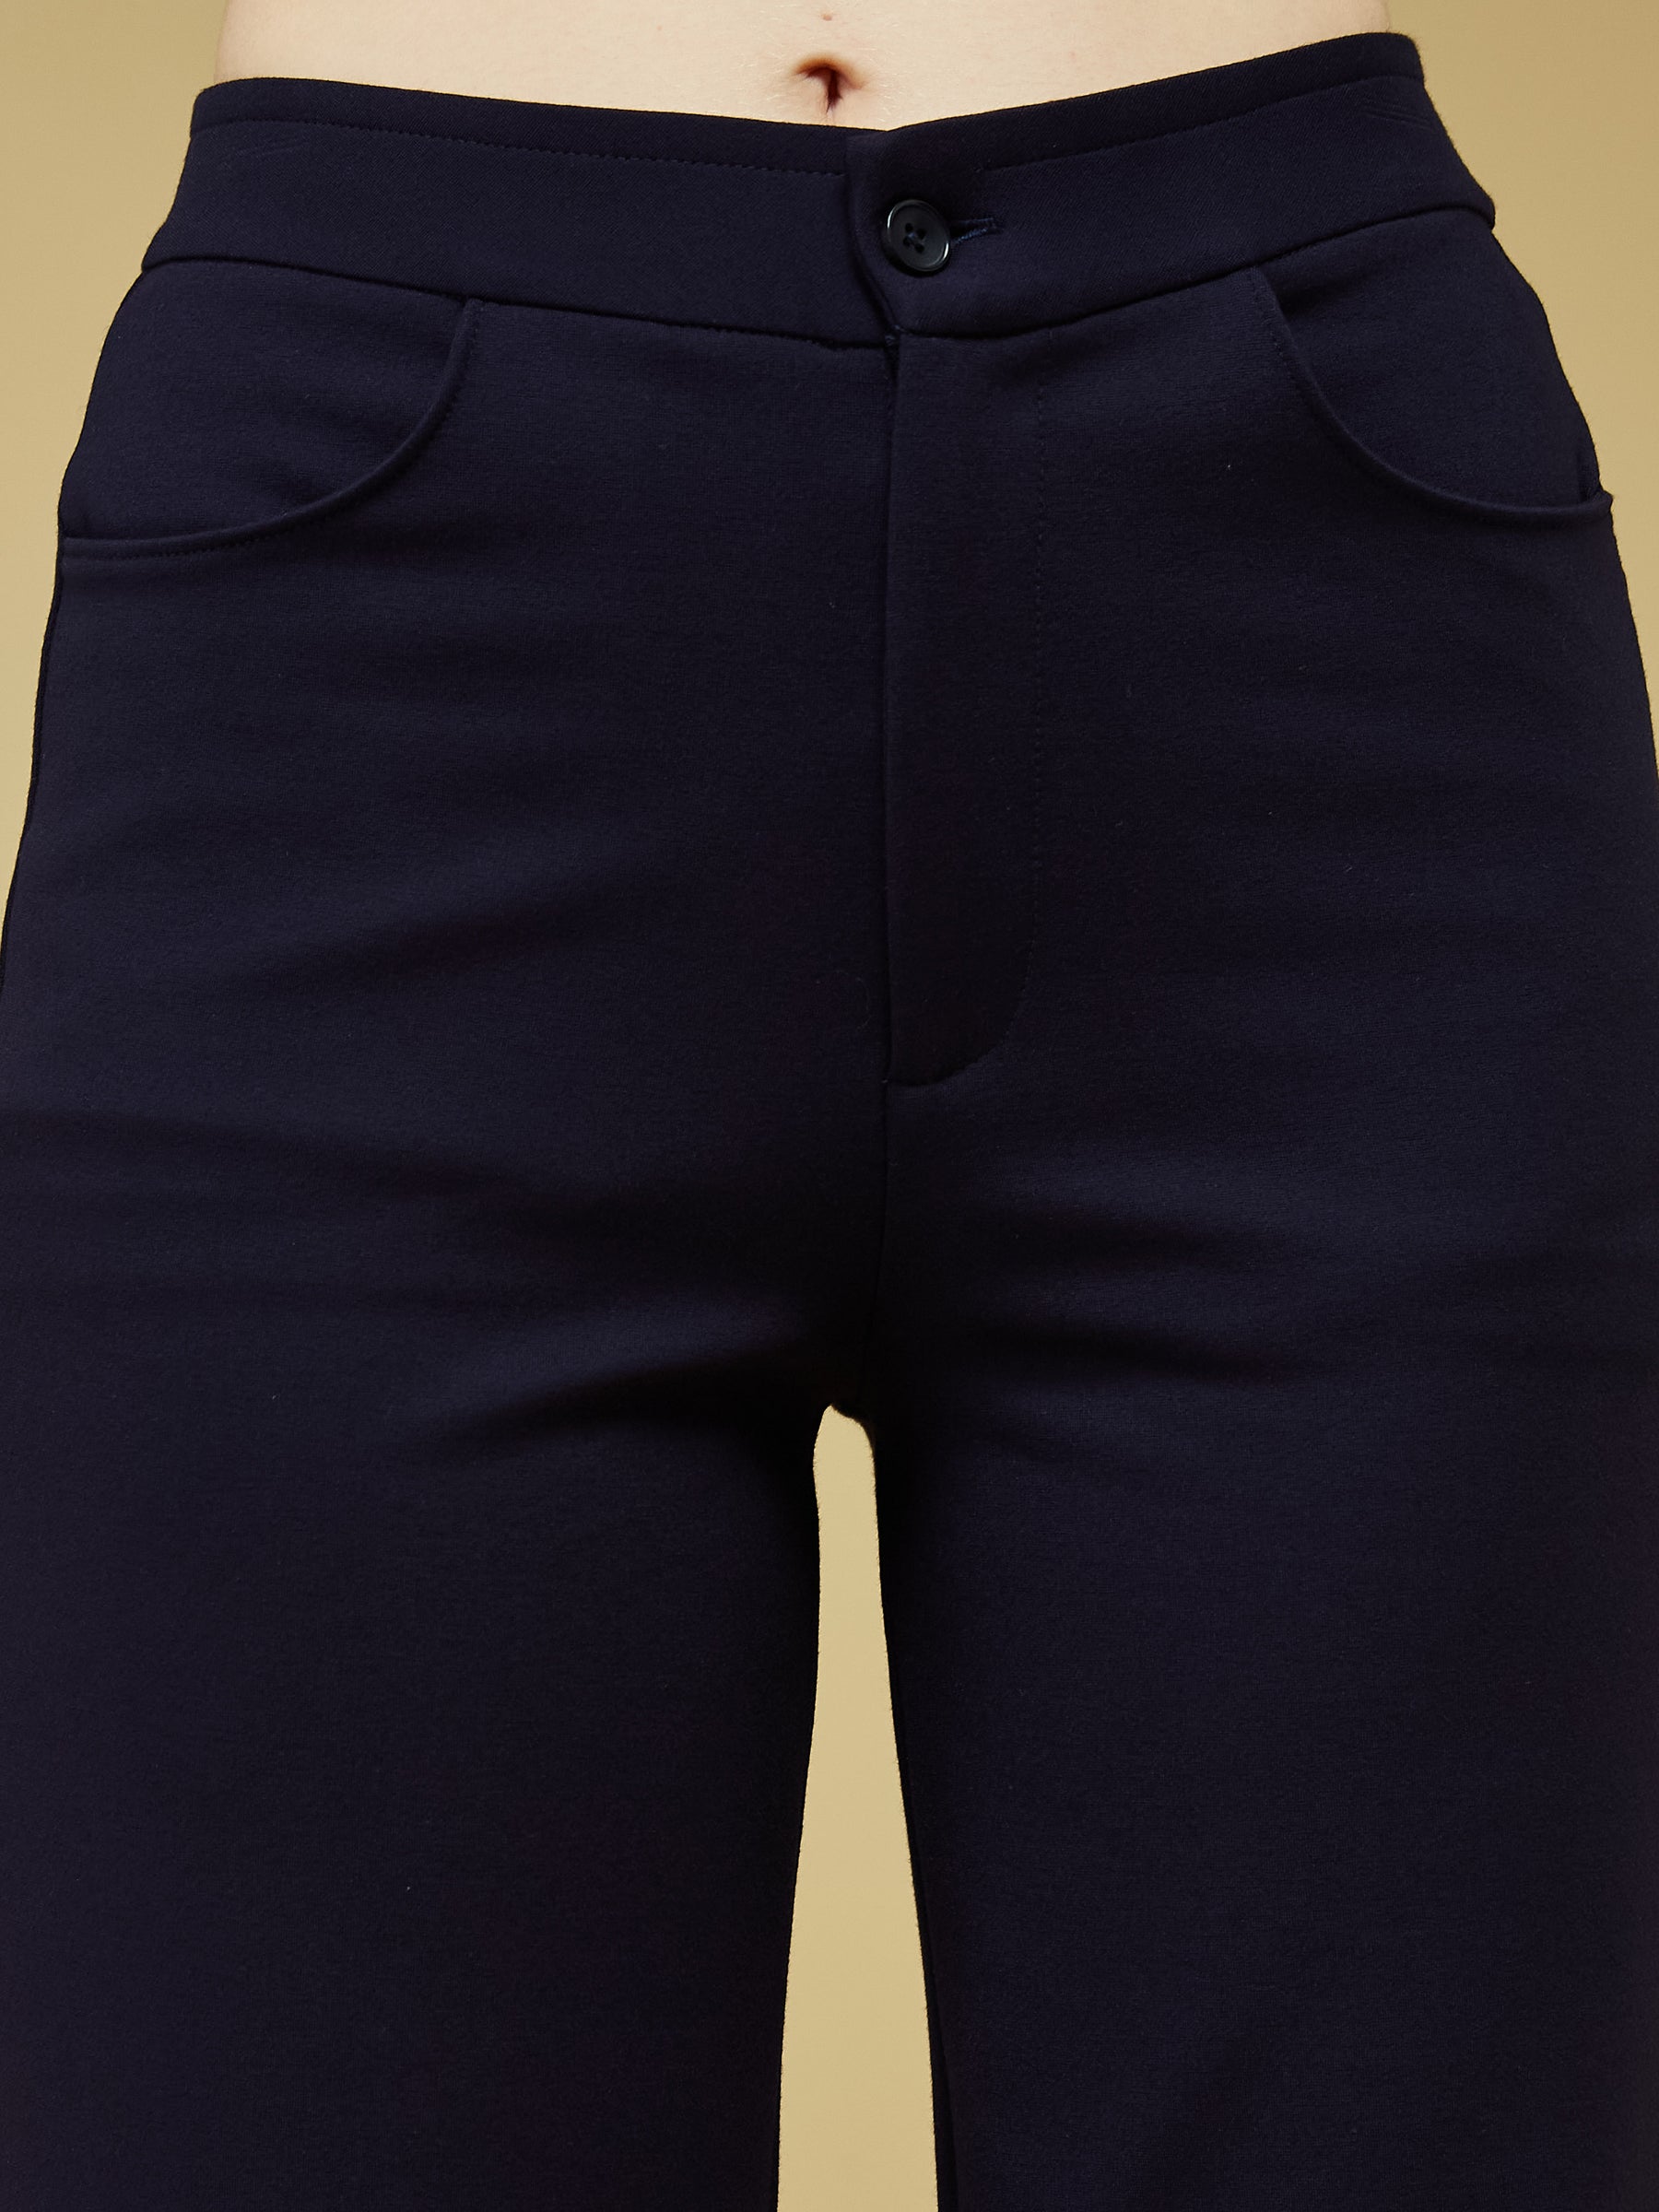 Blue Solid Trouser Pant